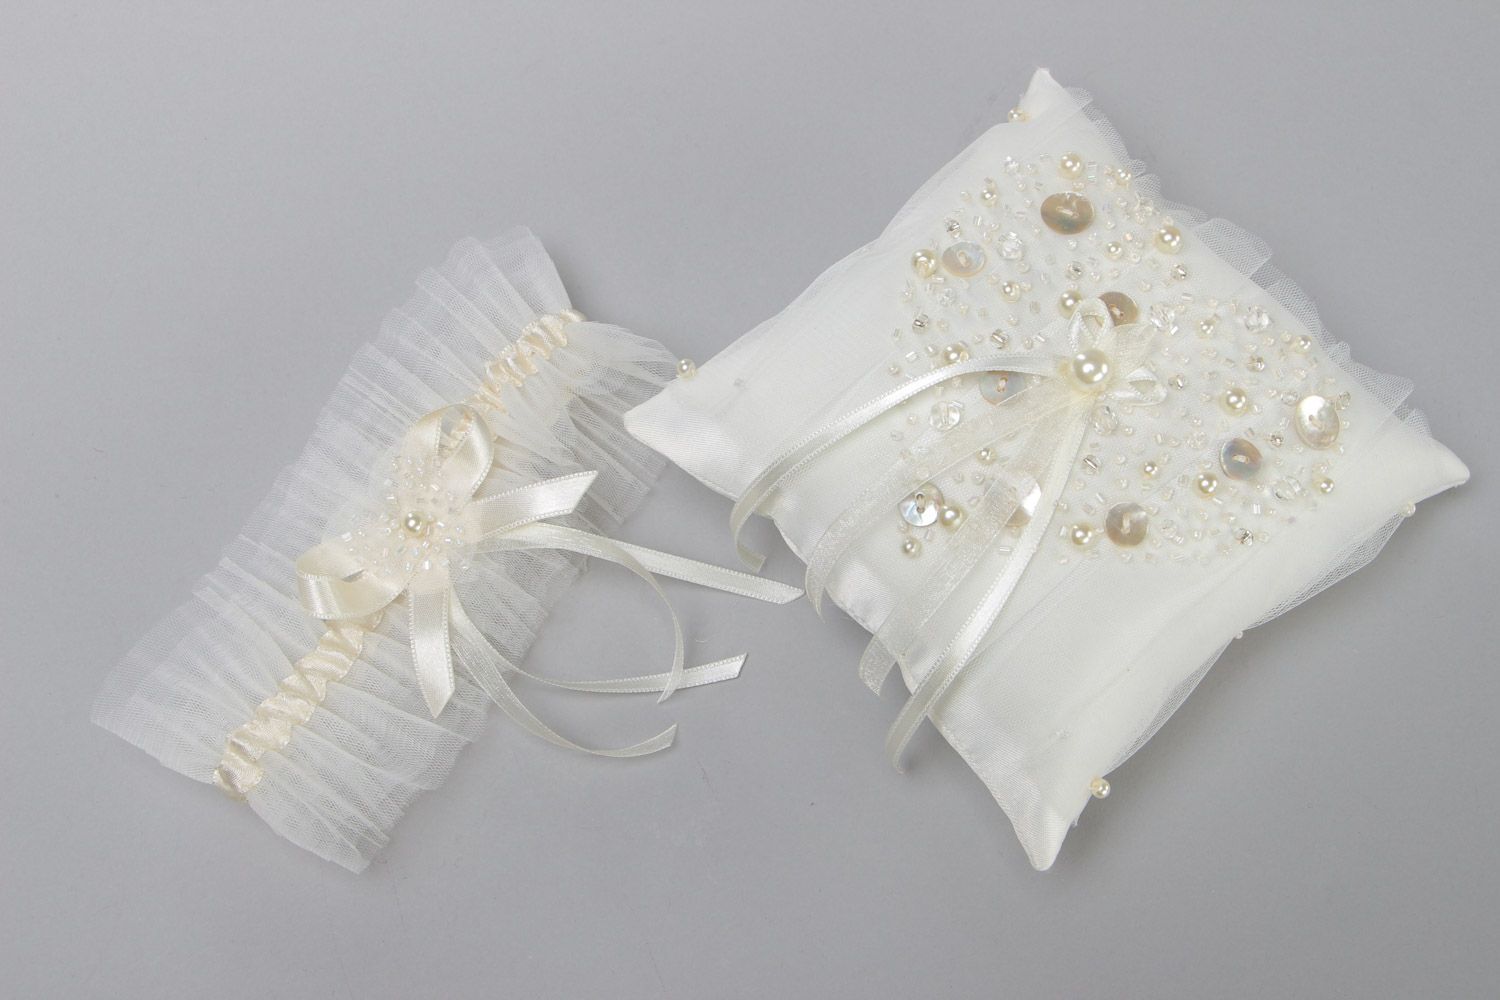 Handmade wedding accessories set 2 items bridal garter and ring bearer pillow Ivory photo 2